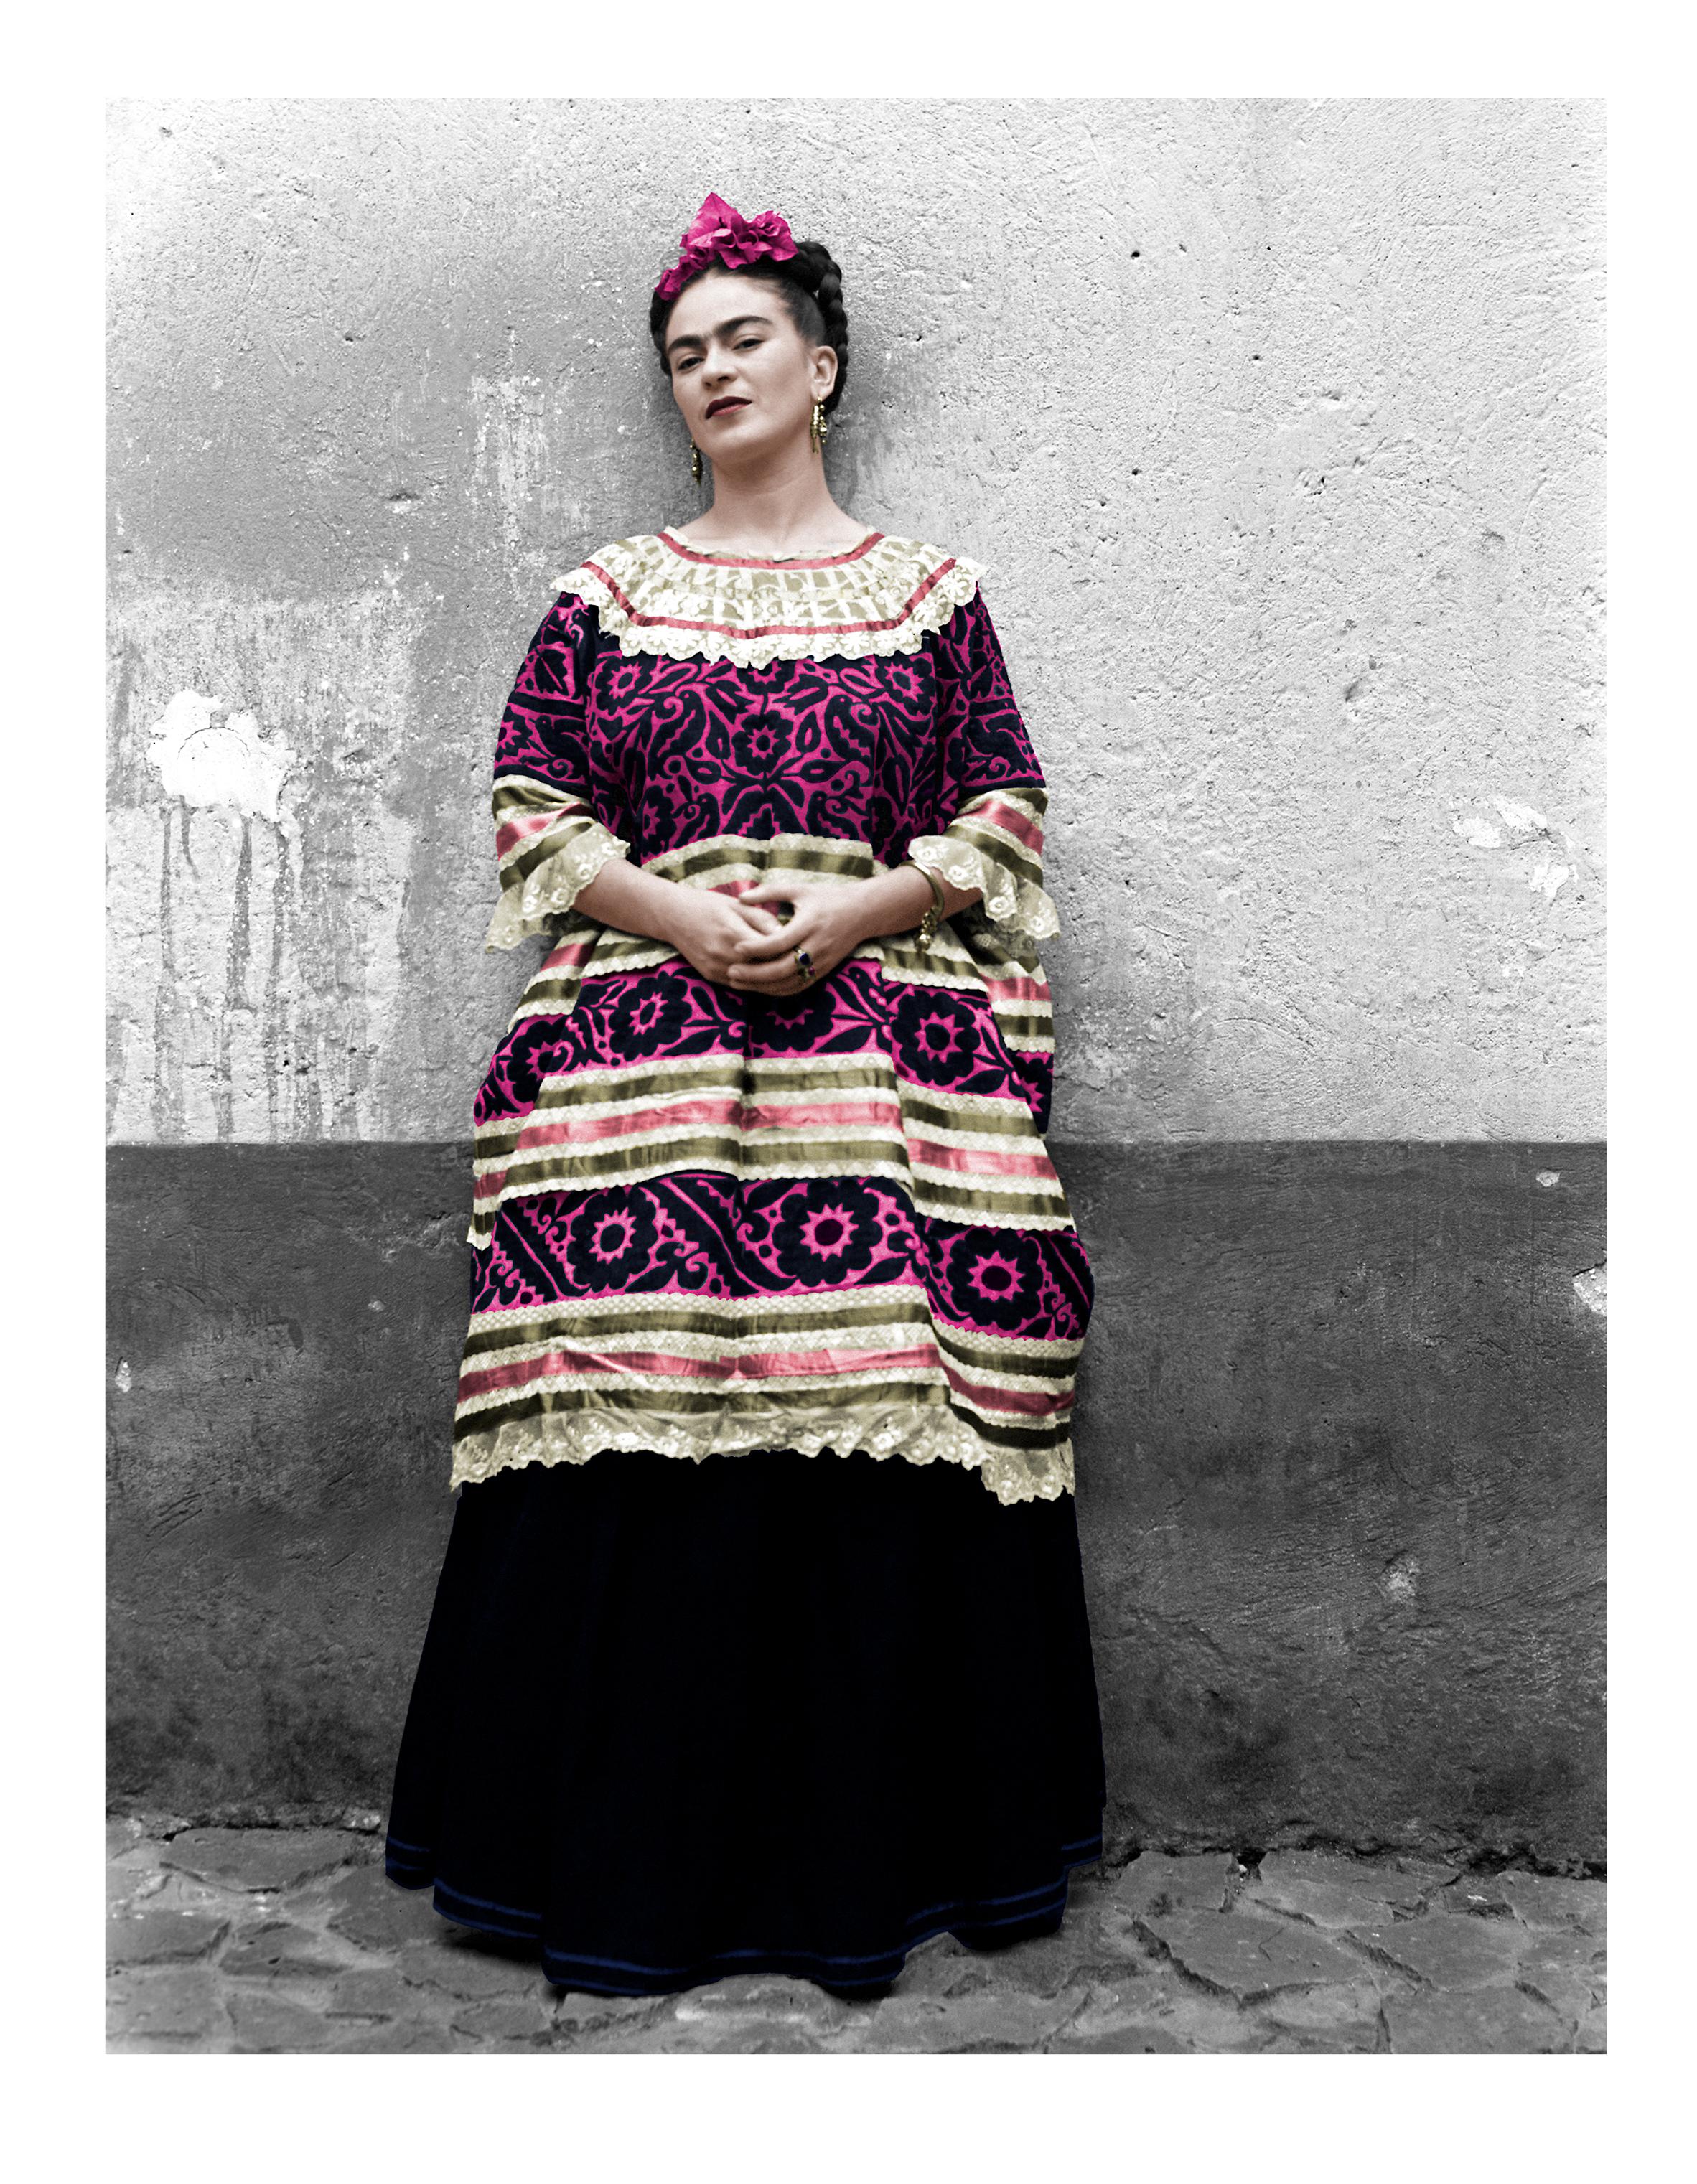 Frida Kahlo in the Blue House (Diptych) Coyoacán, Mexico. 1943. Color Portraits - Photograph by Leo Matiz